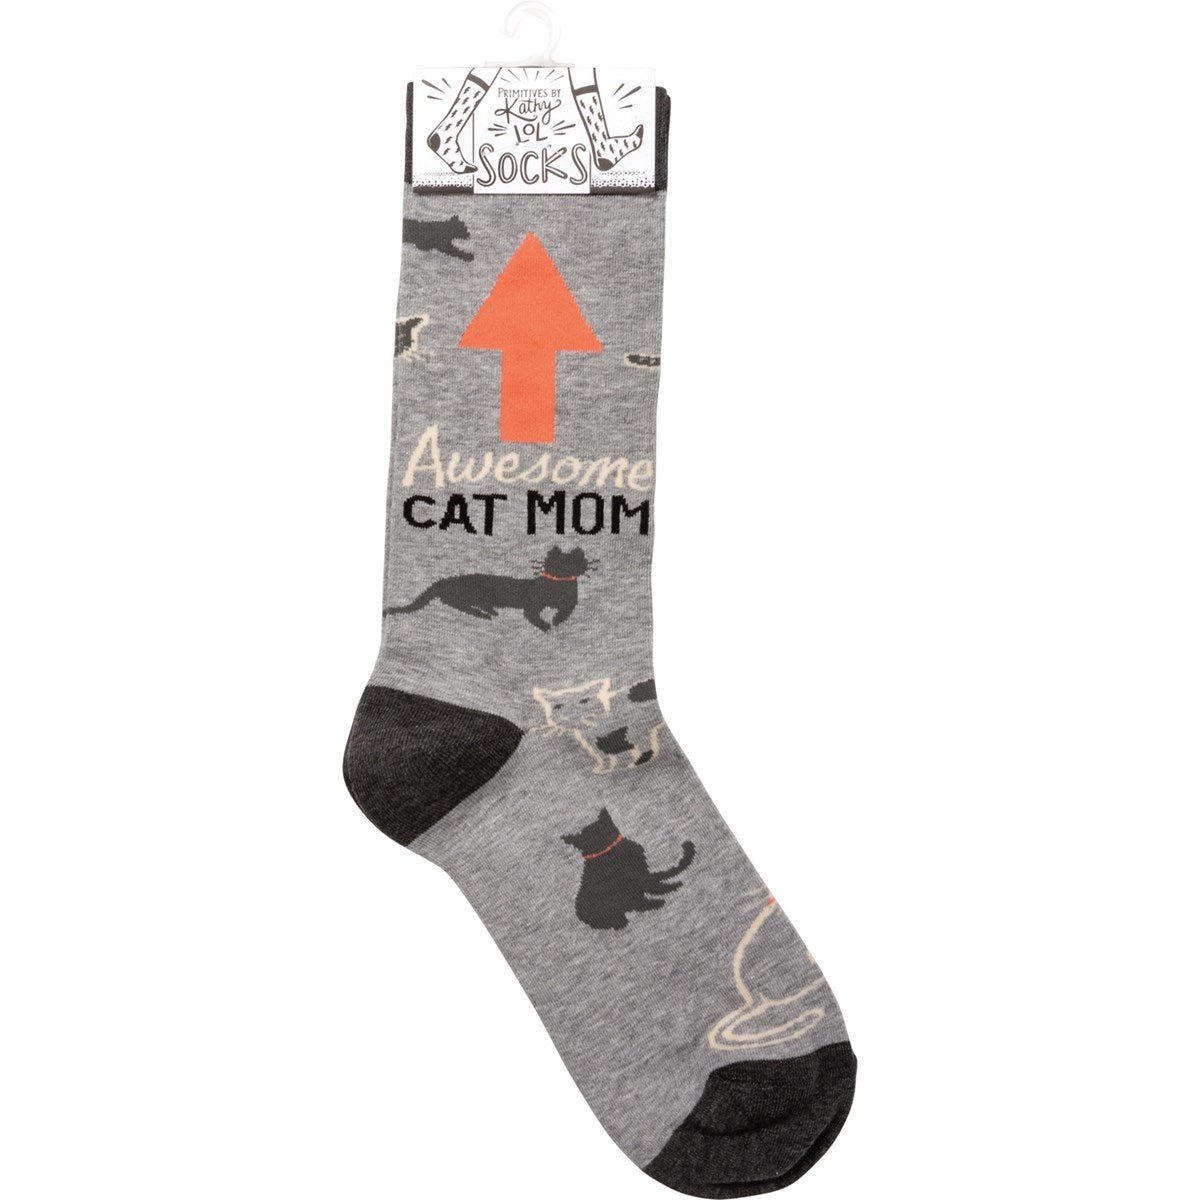 Awesome Cat Mom Socks - Sunnyside Gifts